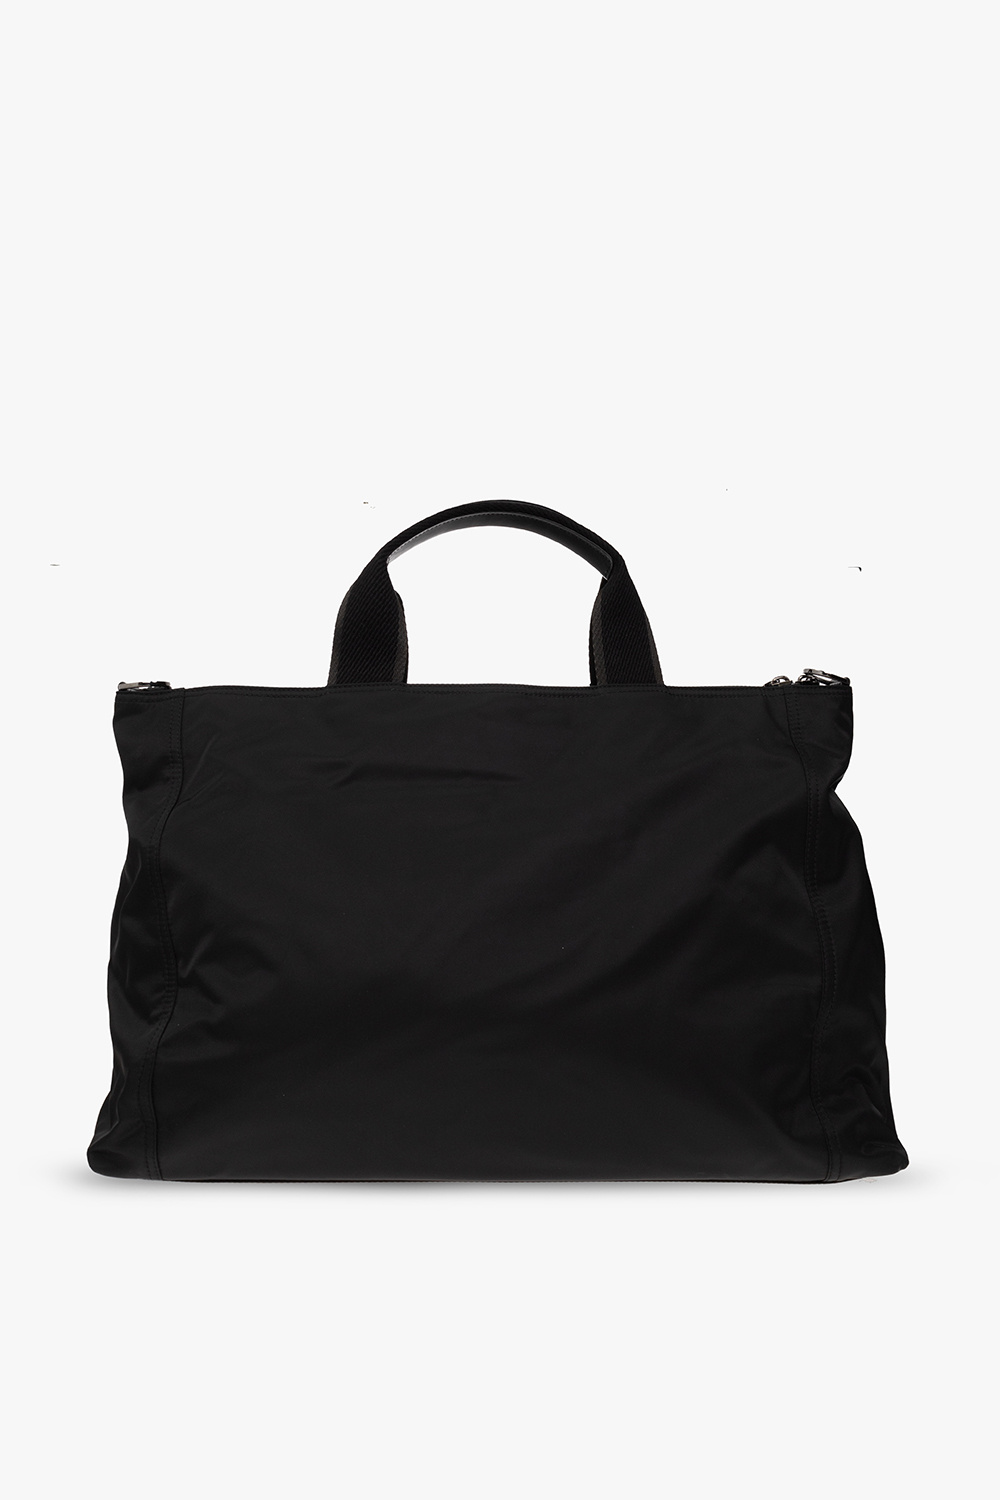 Dolce & Gabbana ‘Sicilia DNA’ shopper bag